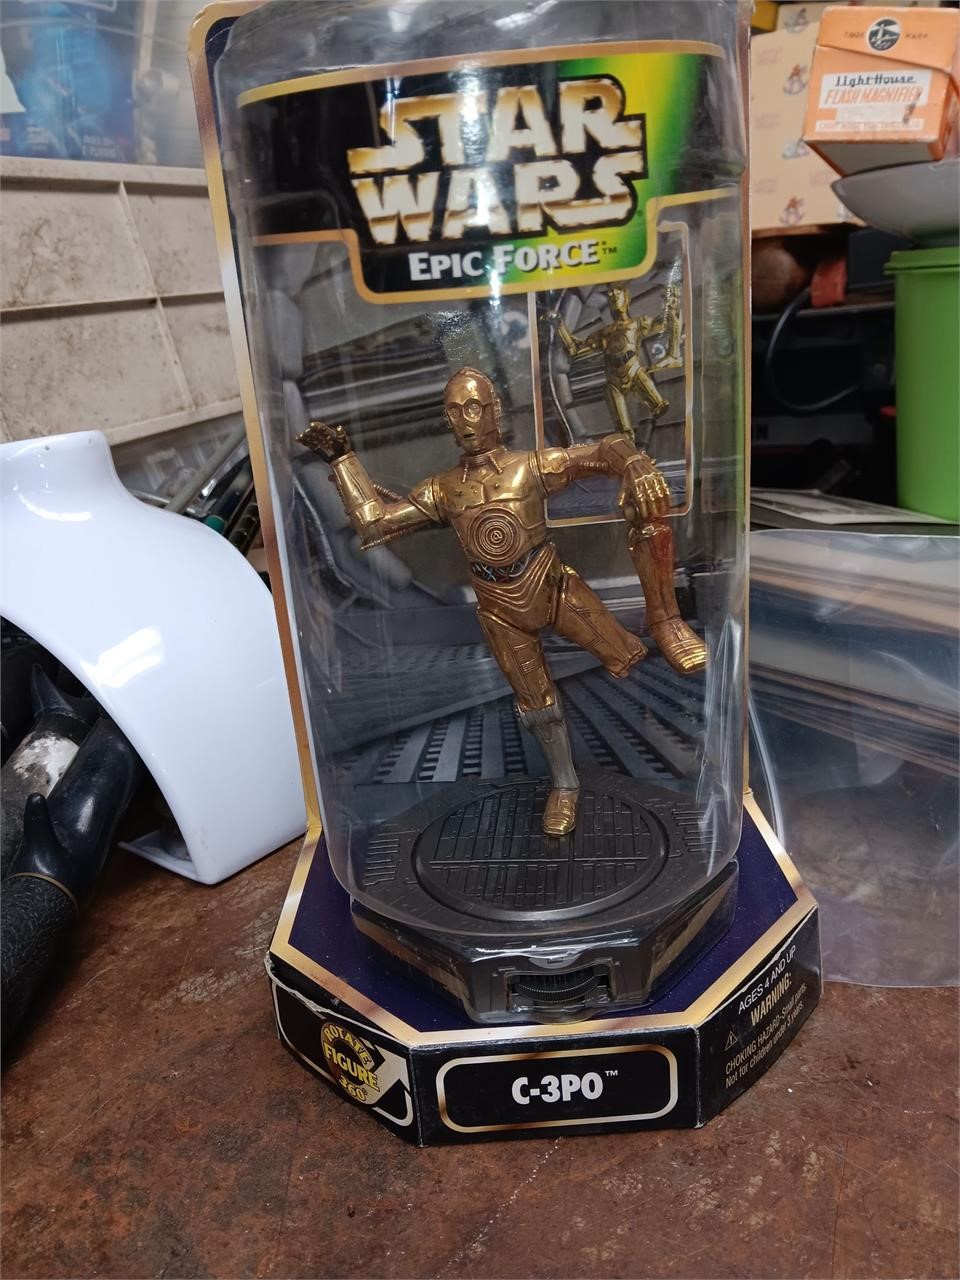 Star Wars Epic Force C-3PO sealed